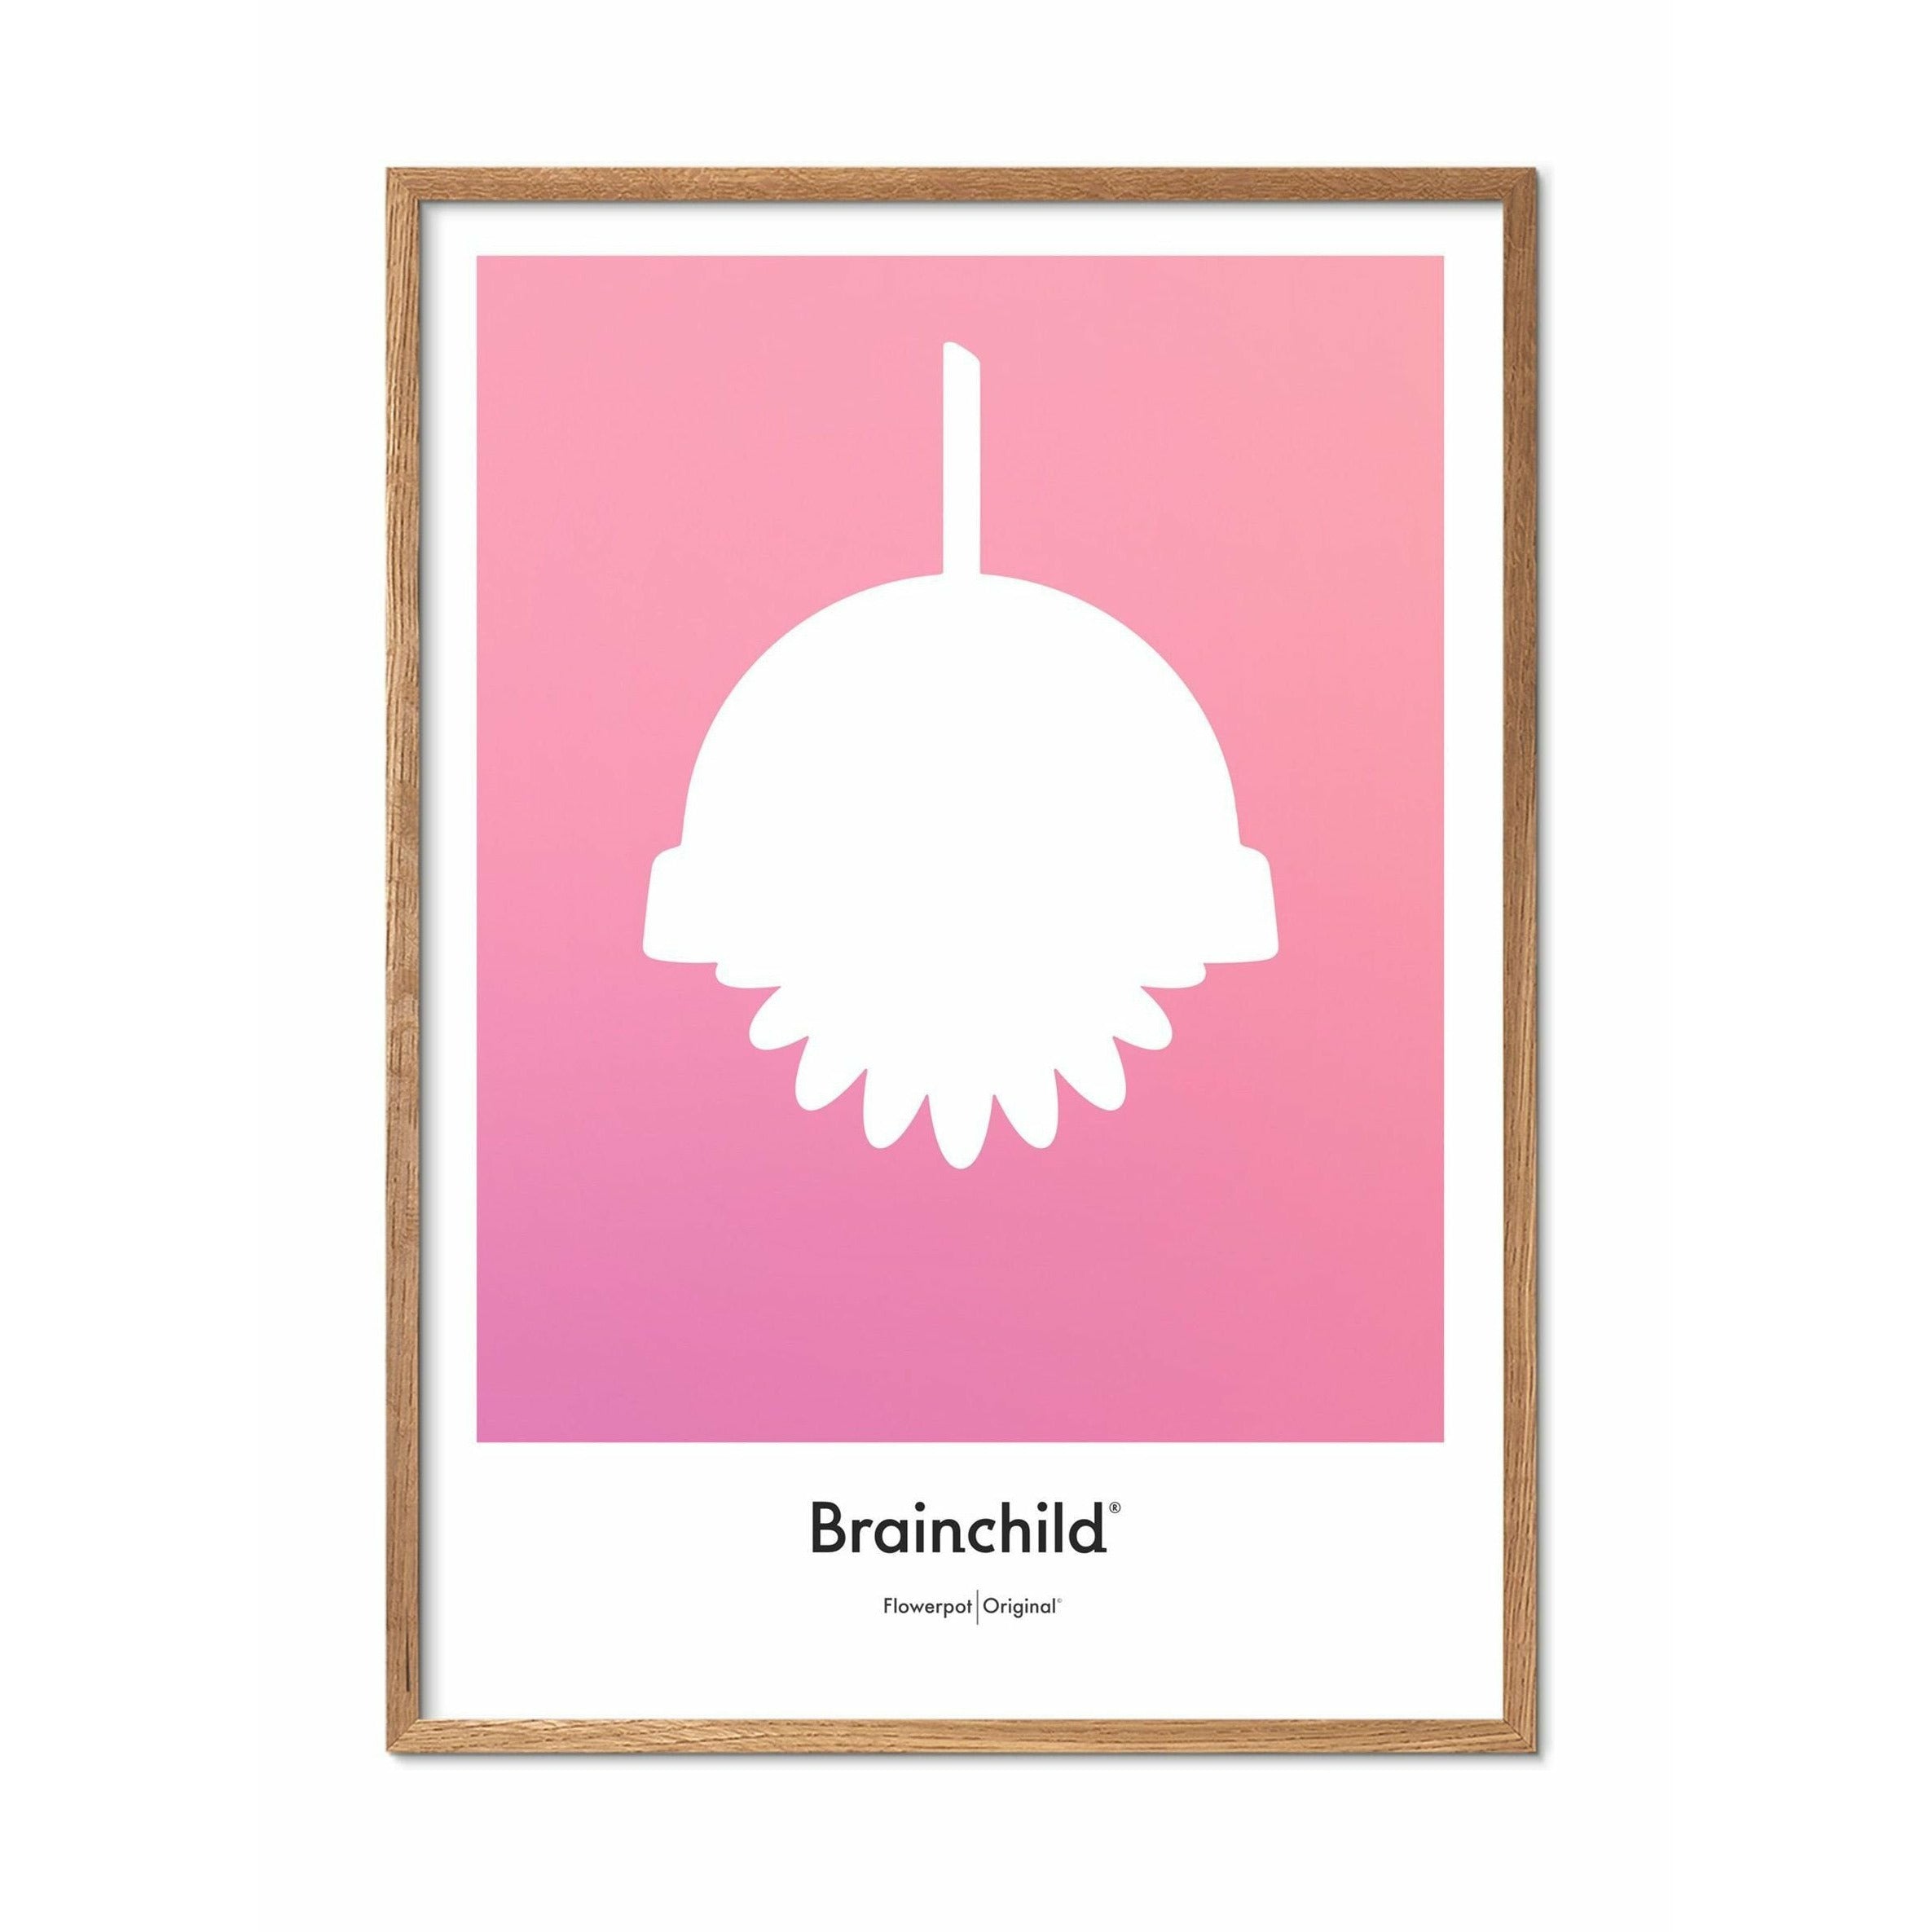 Brainchild Flowerpot Design Icon Poster, Frame Made Of Light Wood 30x40 Cm, Pink